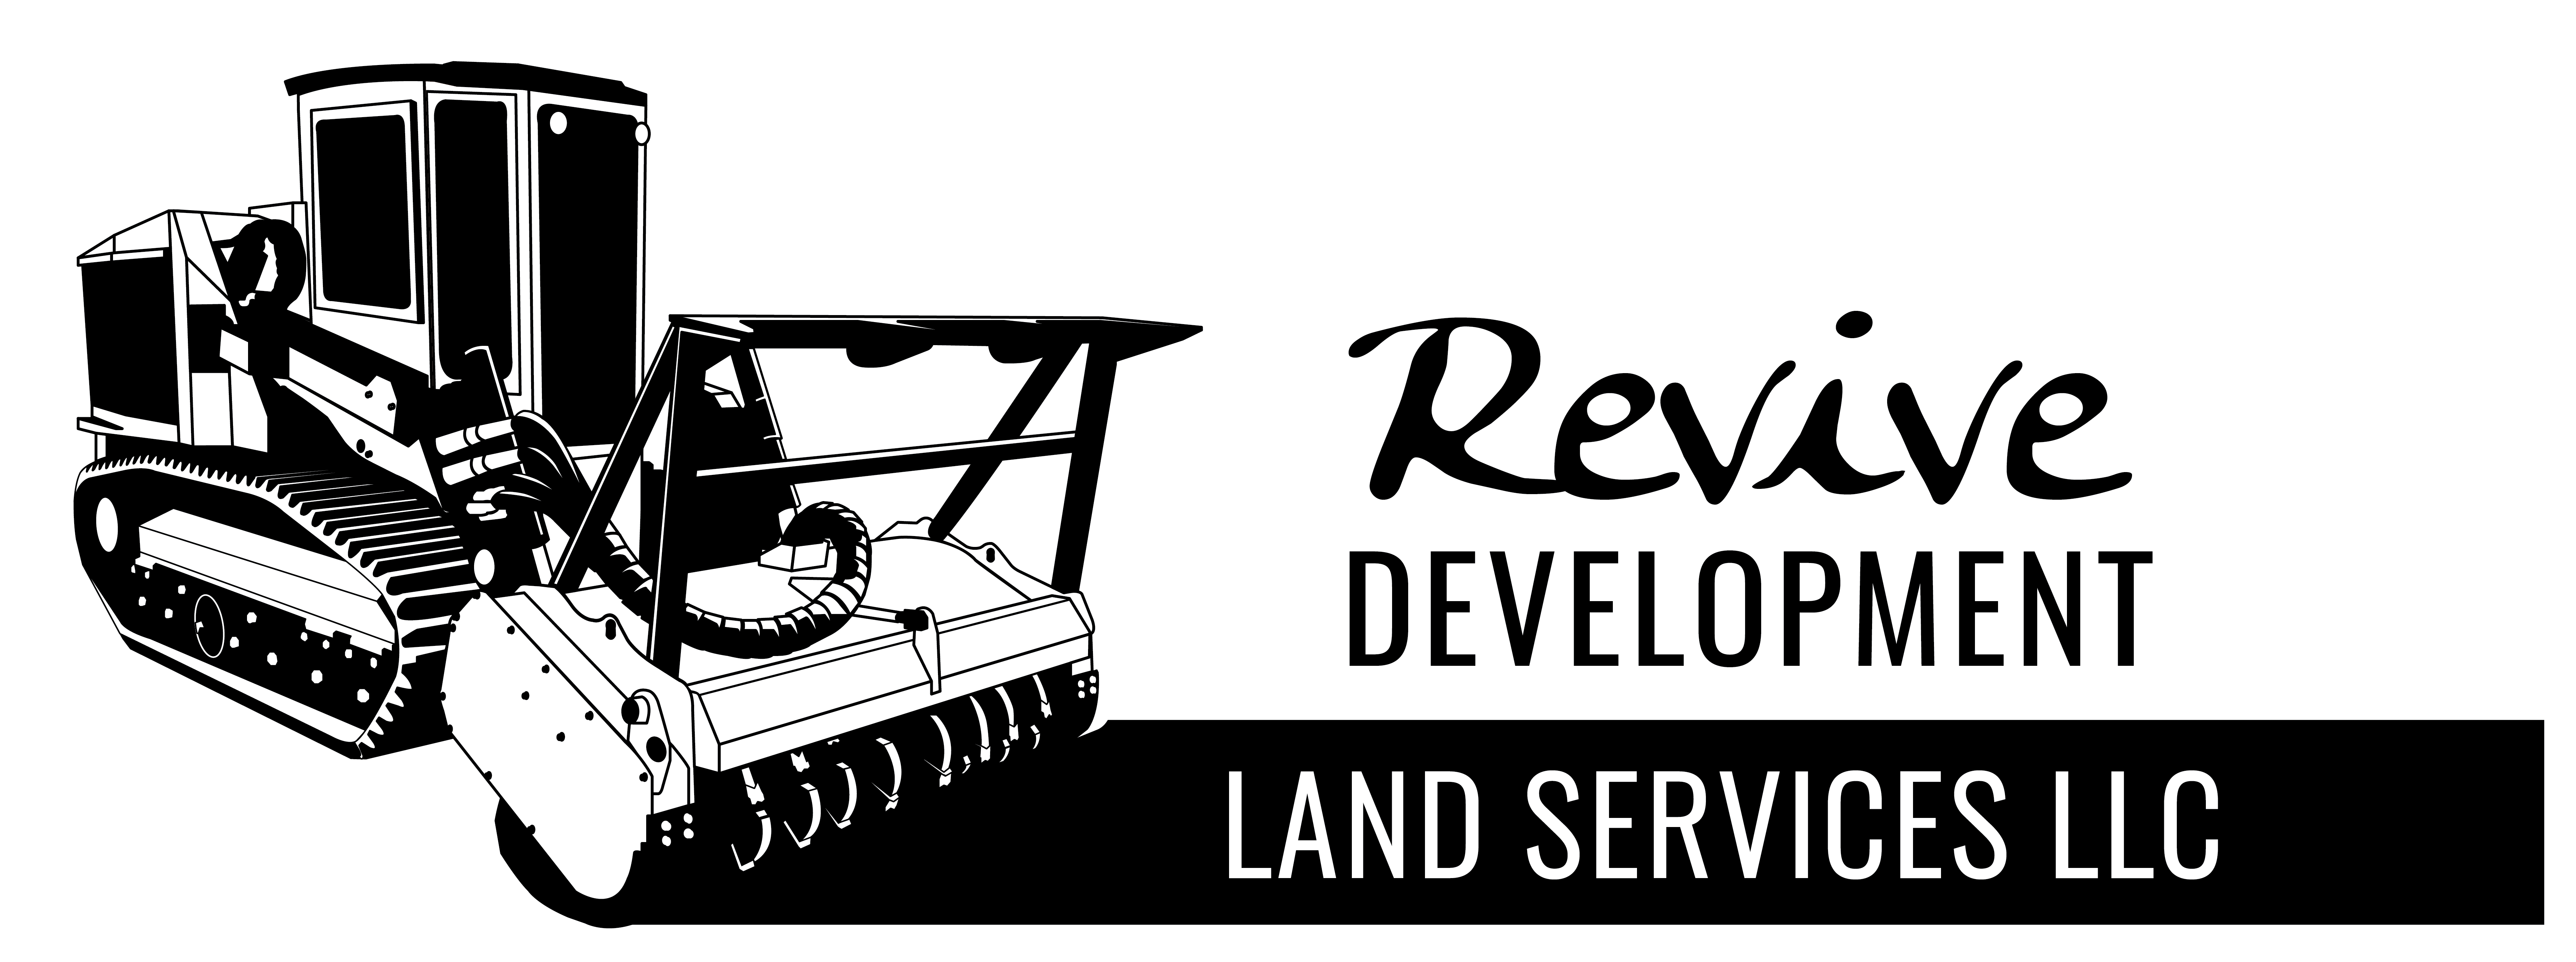 Revive Development Land Services, LLC Logo